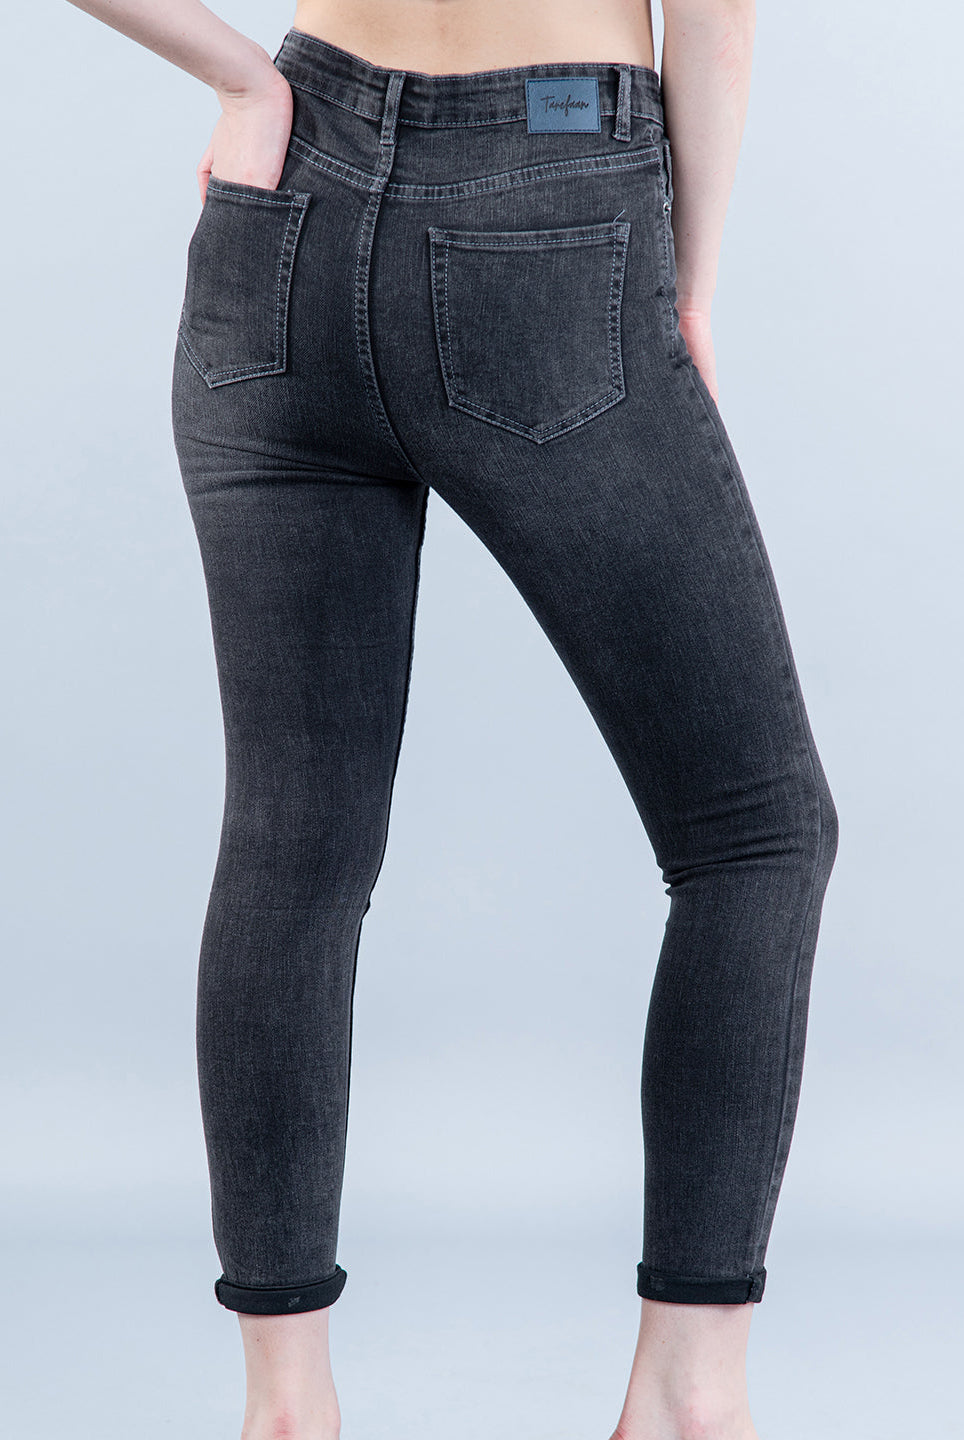 girls jeans brand